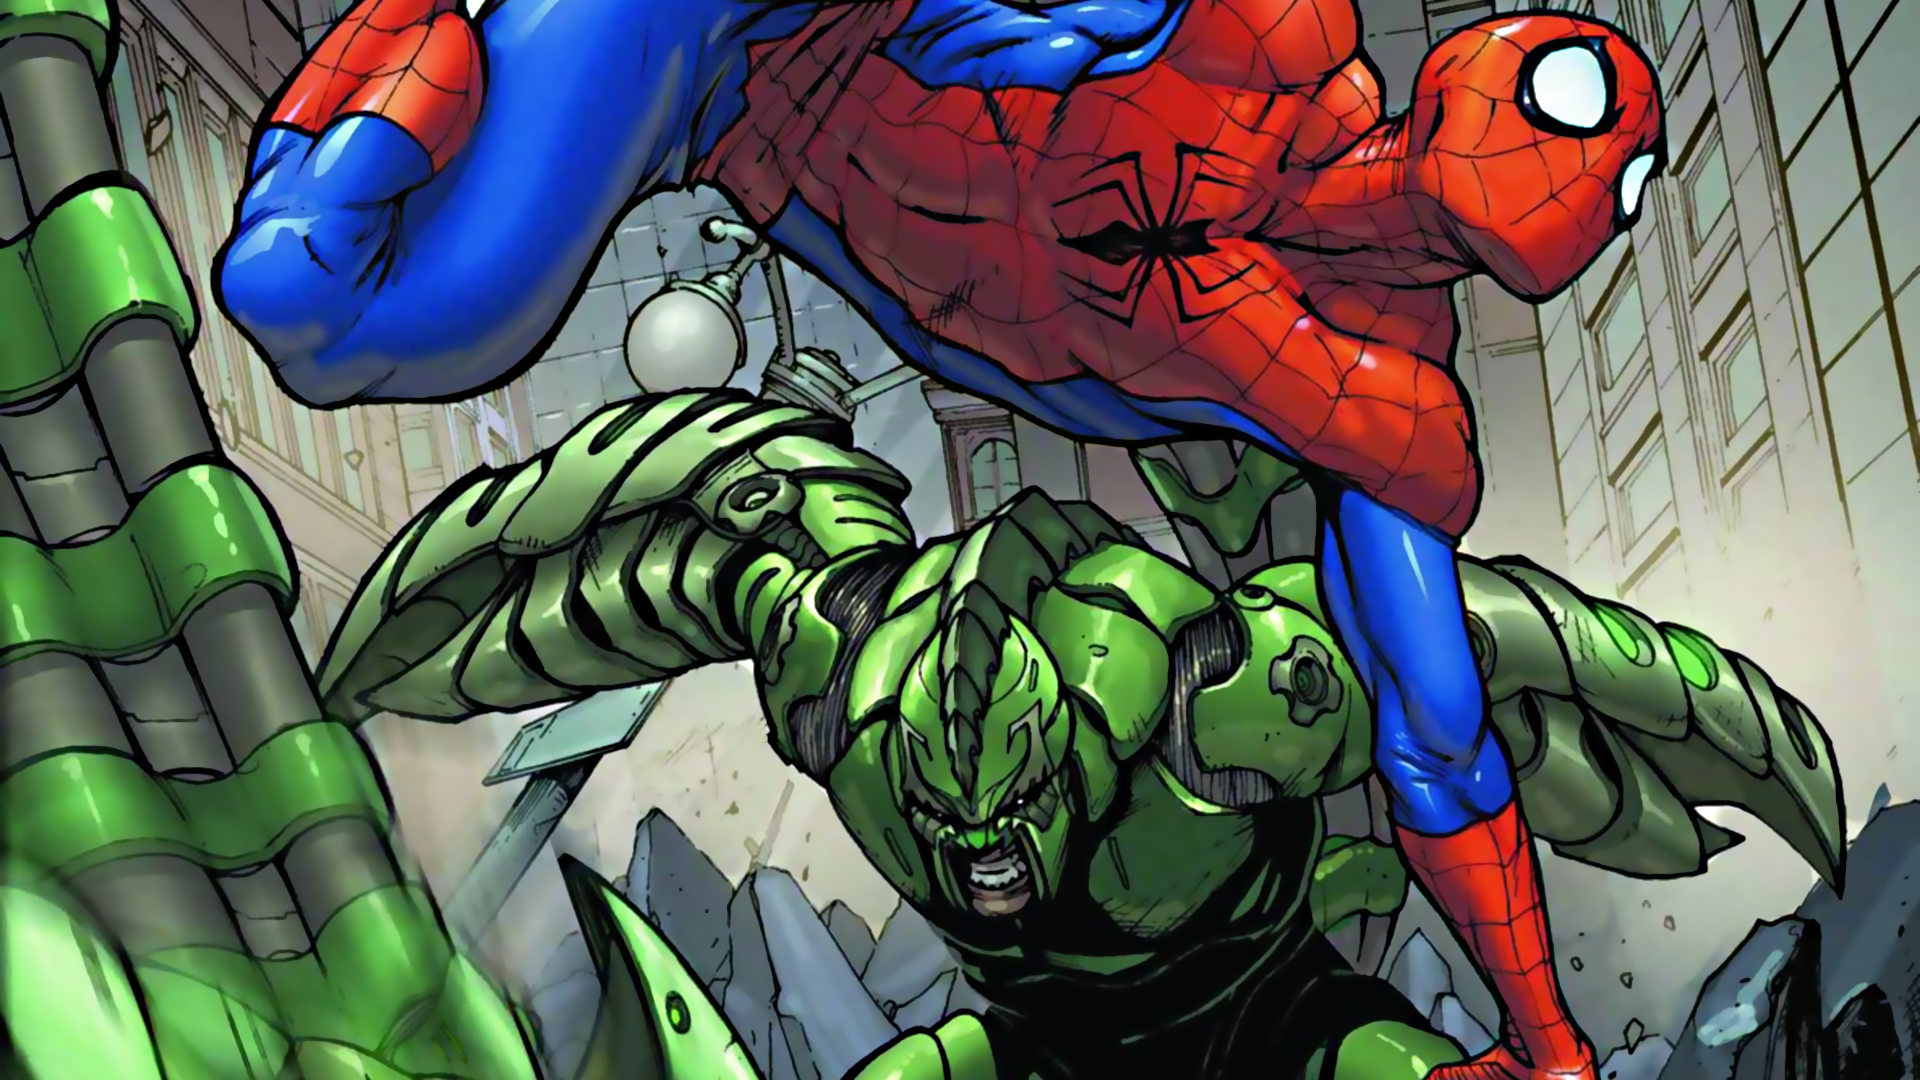 marvel hd wallpapers free download,fictional character,superhero,fiction,comics,spider man